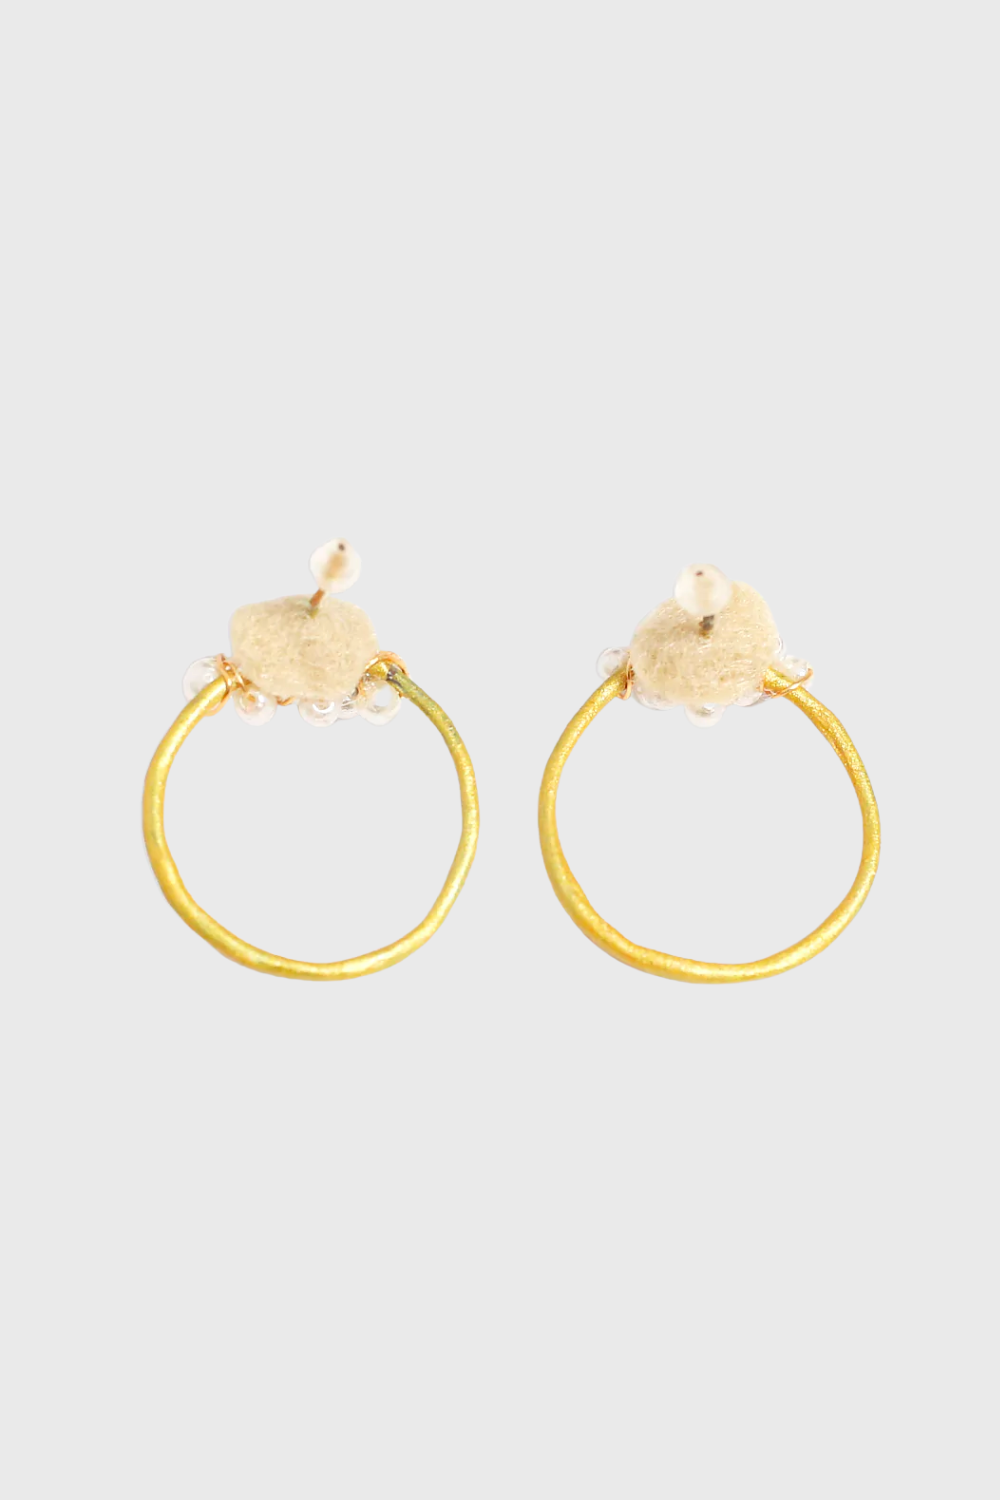 Circle Pearls Earrings in Gold